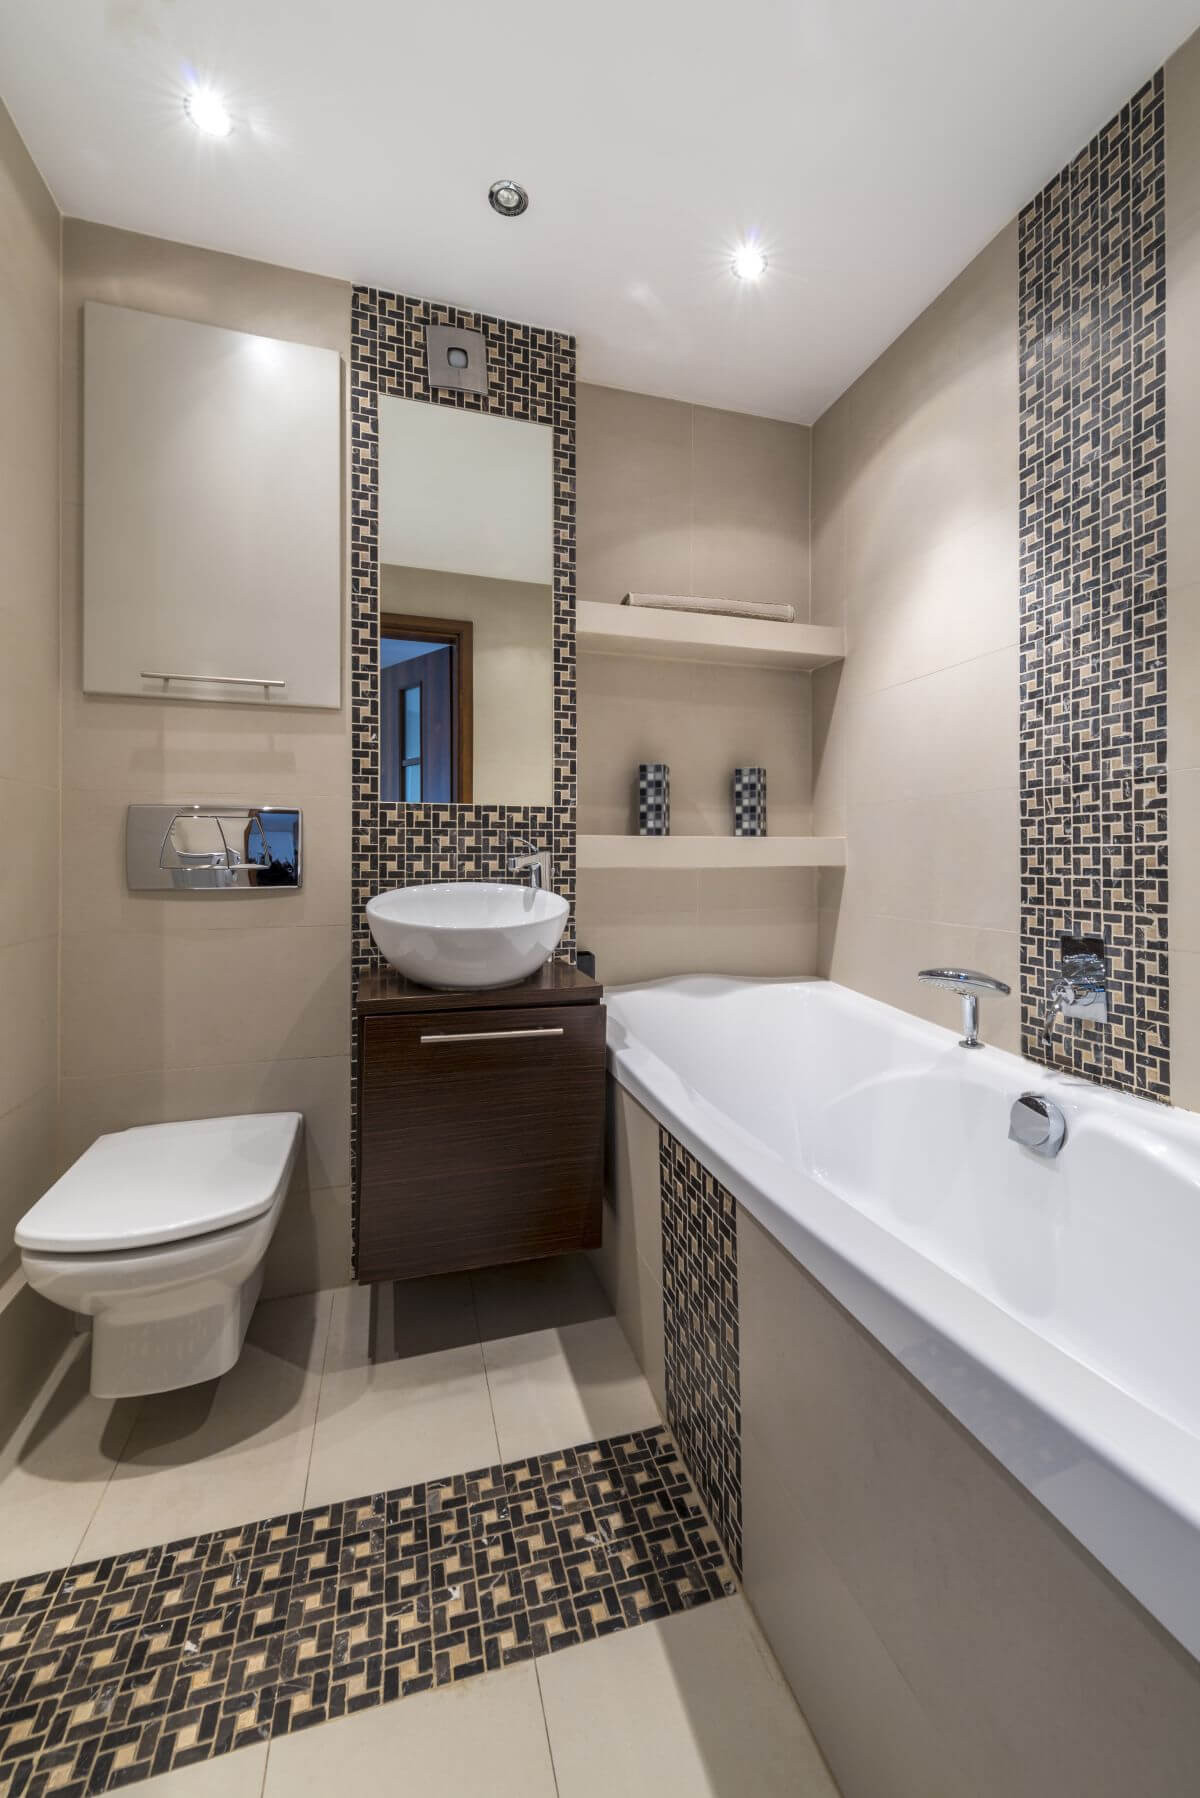 Tile Ideas For Small Bathroom
 31 Small Bathroom Design Ideas To Get Inspired